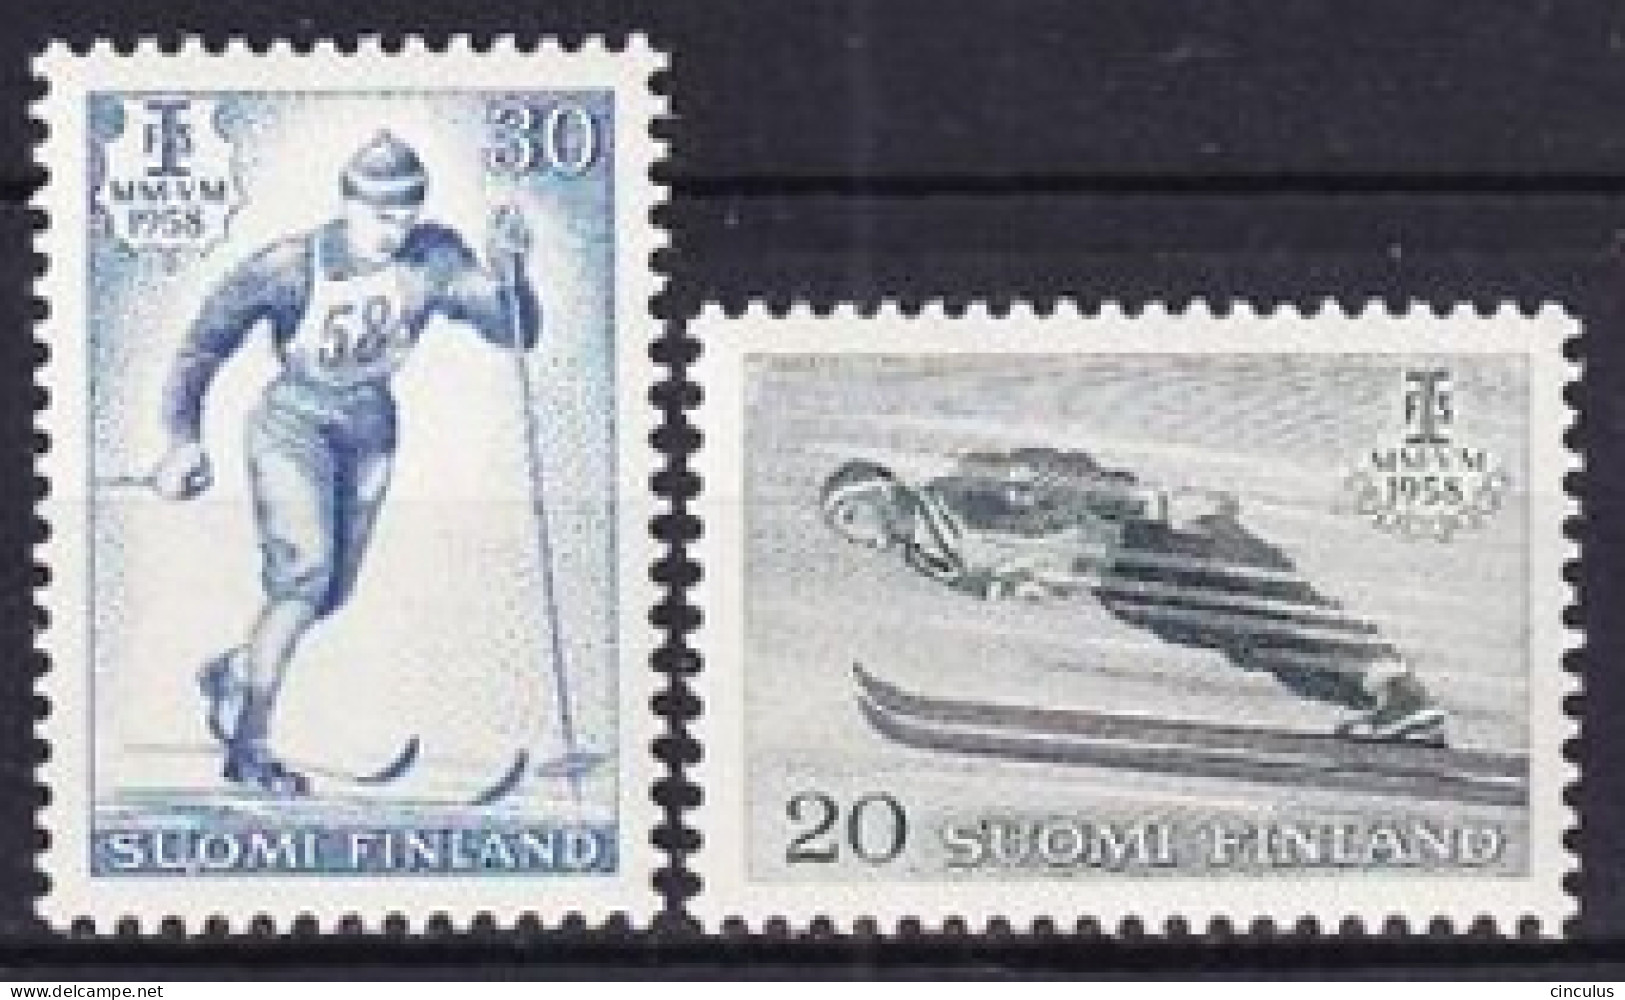 1958. Finland. World Championships Skiing. MNH. Mi. Nr. 489-90 - Unused Stamps